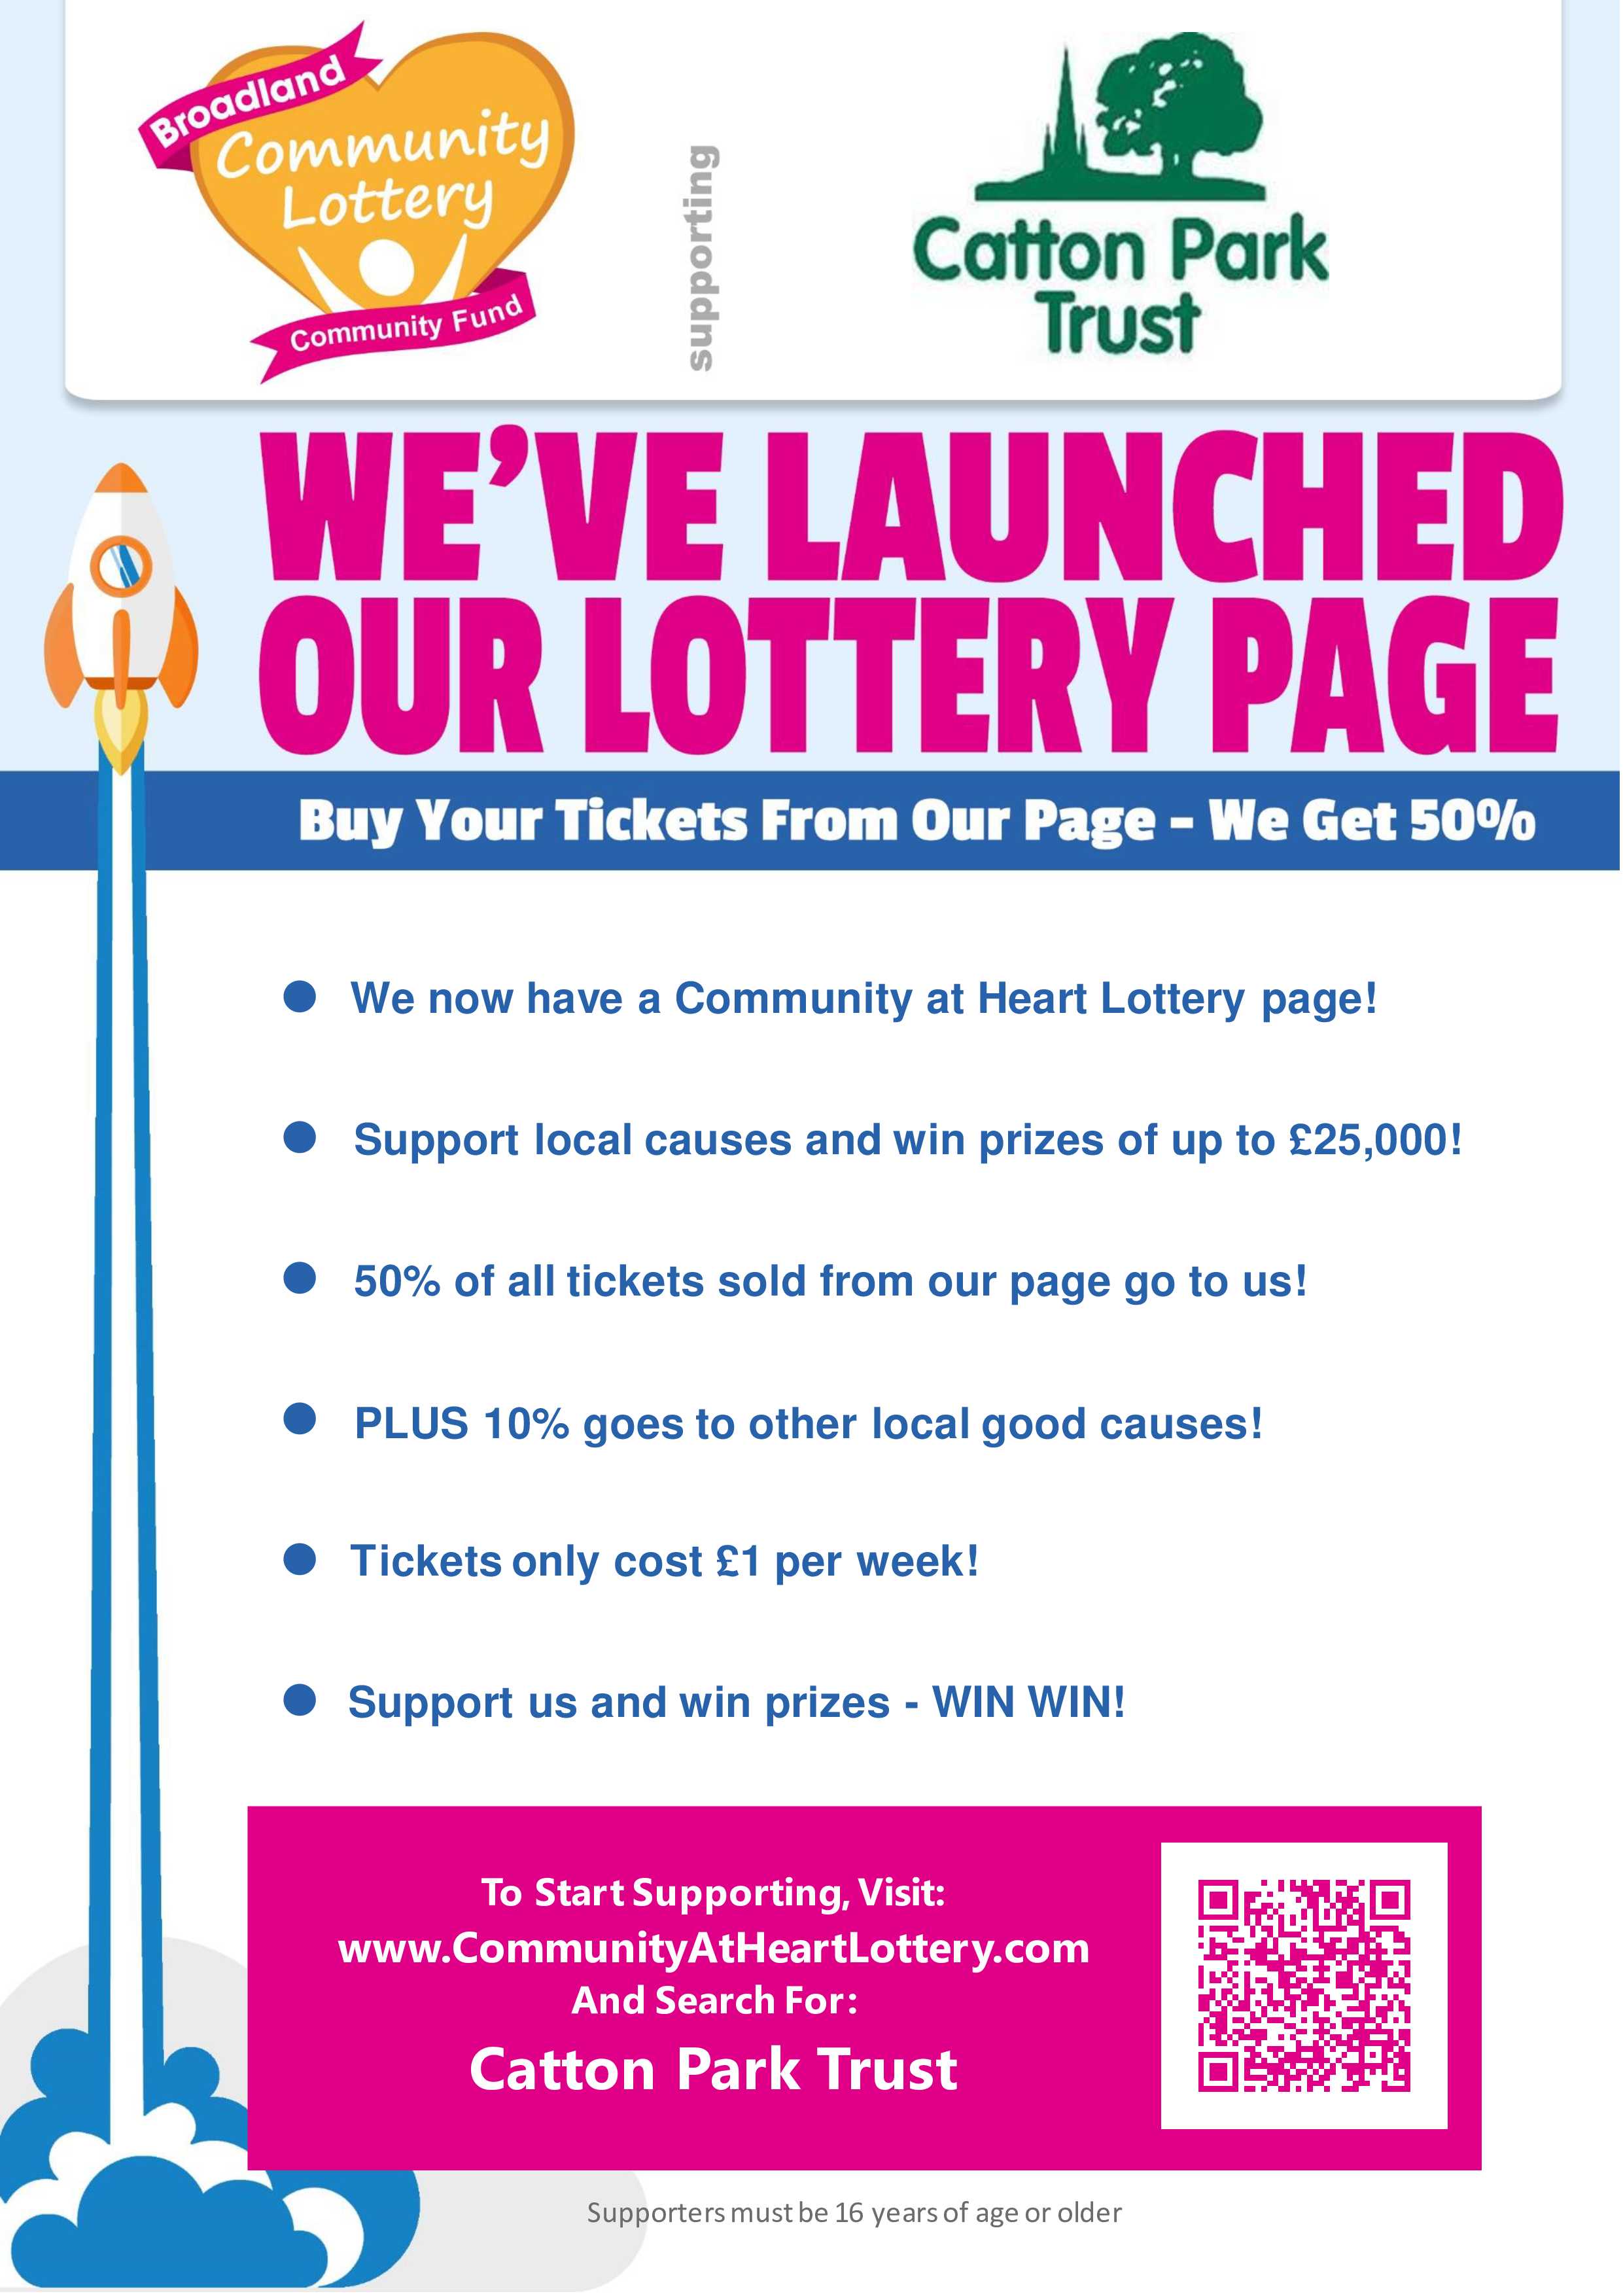 Broadland Community Lottery